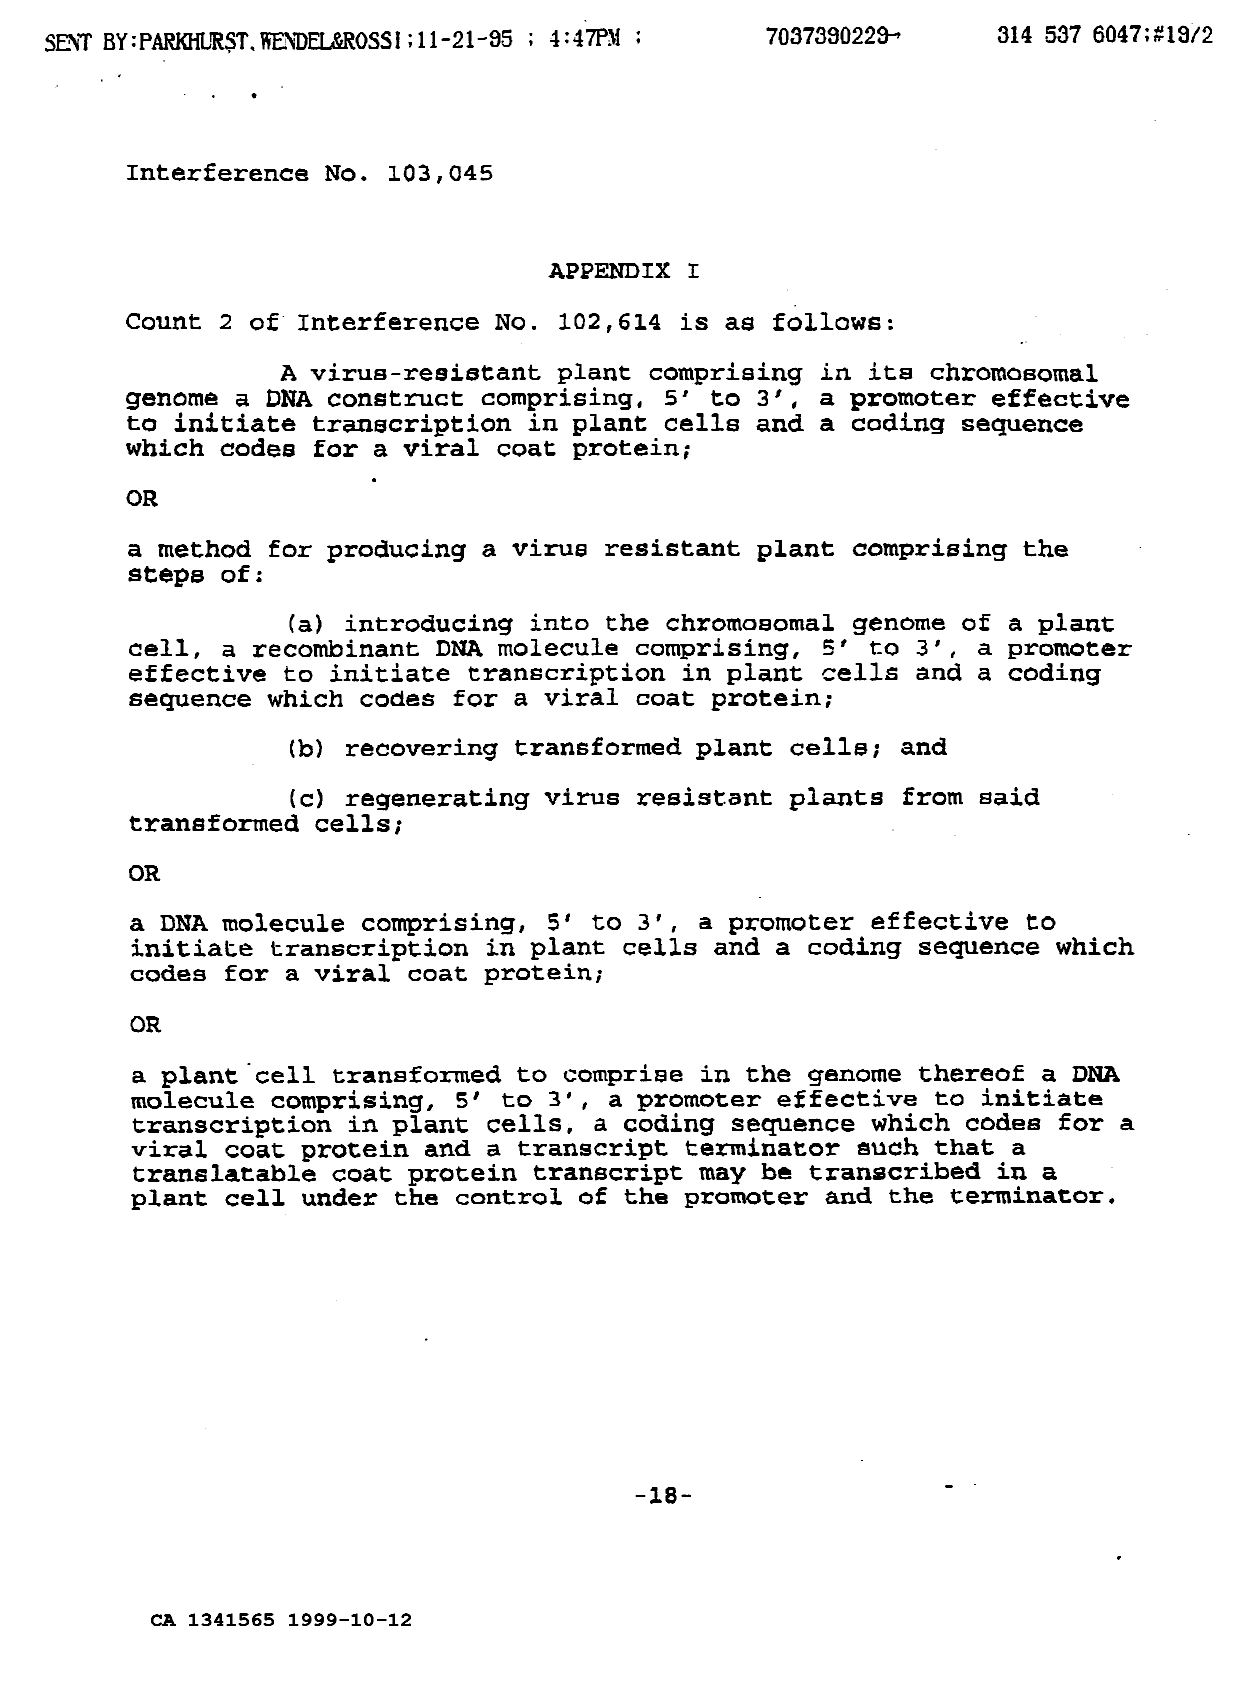 Canadian Patent Document 1341565. Prosecution Correspondence 19991012. Image 26 of 26